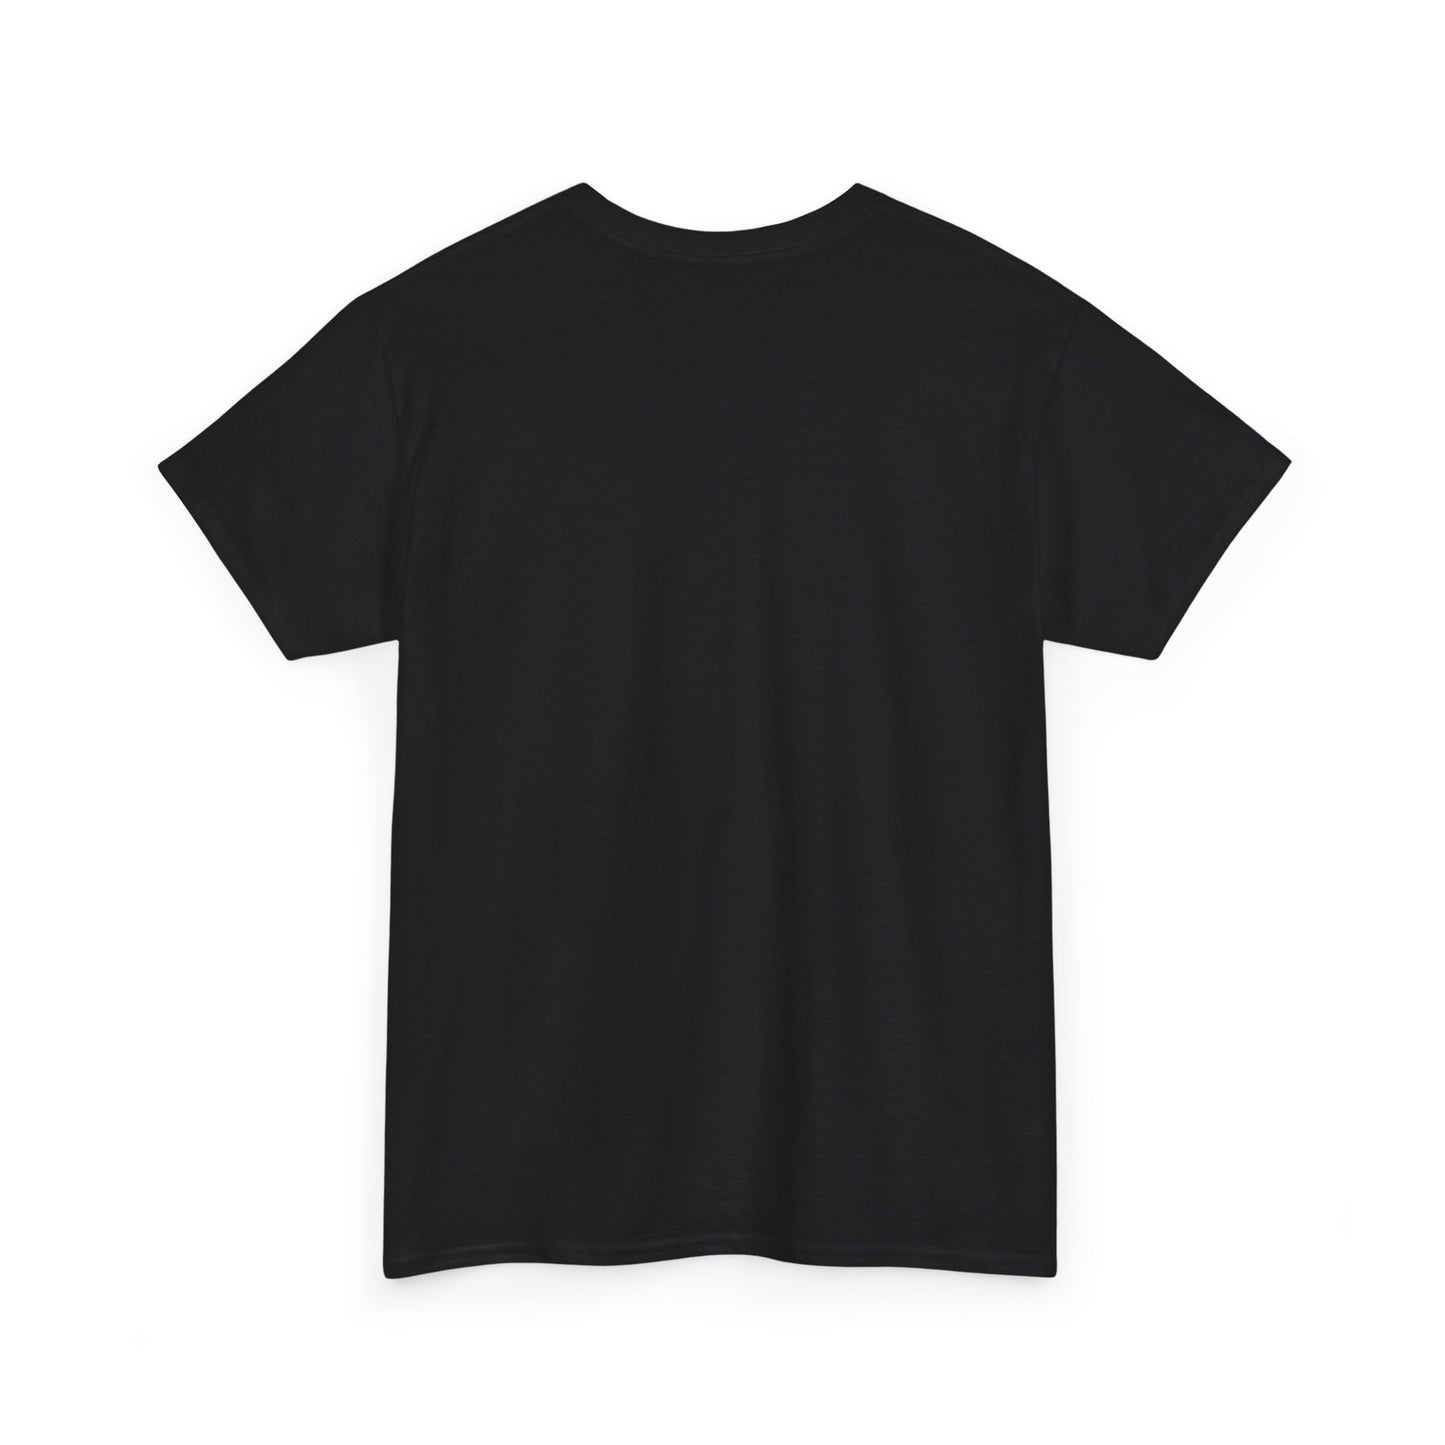 Makunochi Ippo Regular T-shirt - Hajime no Ippo